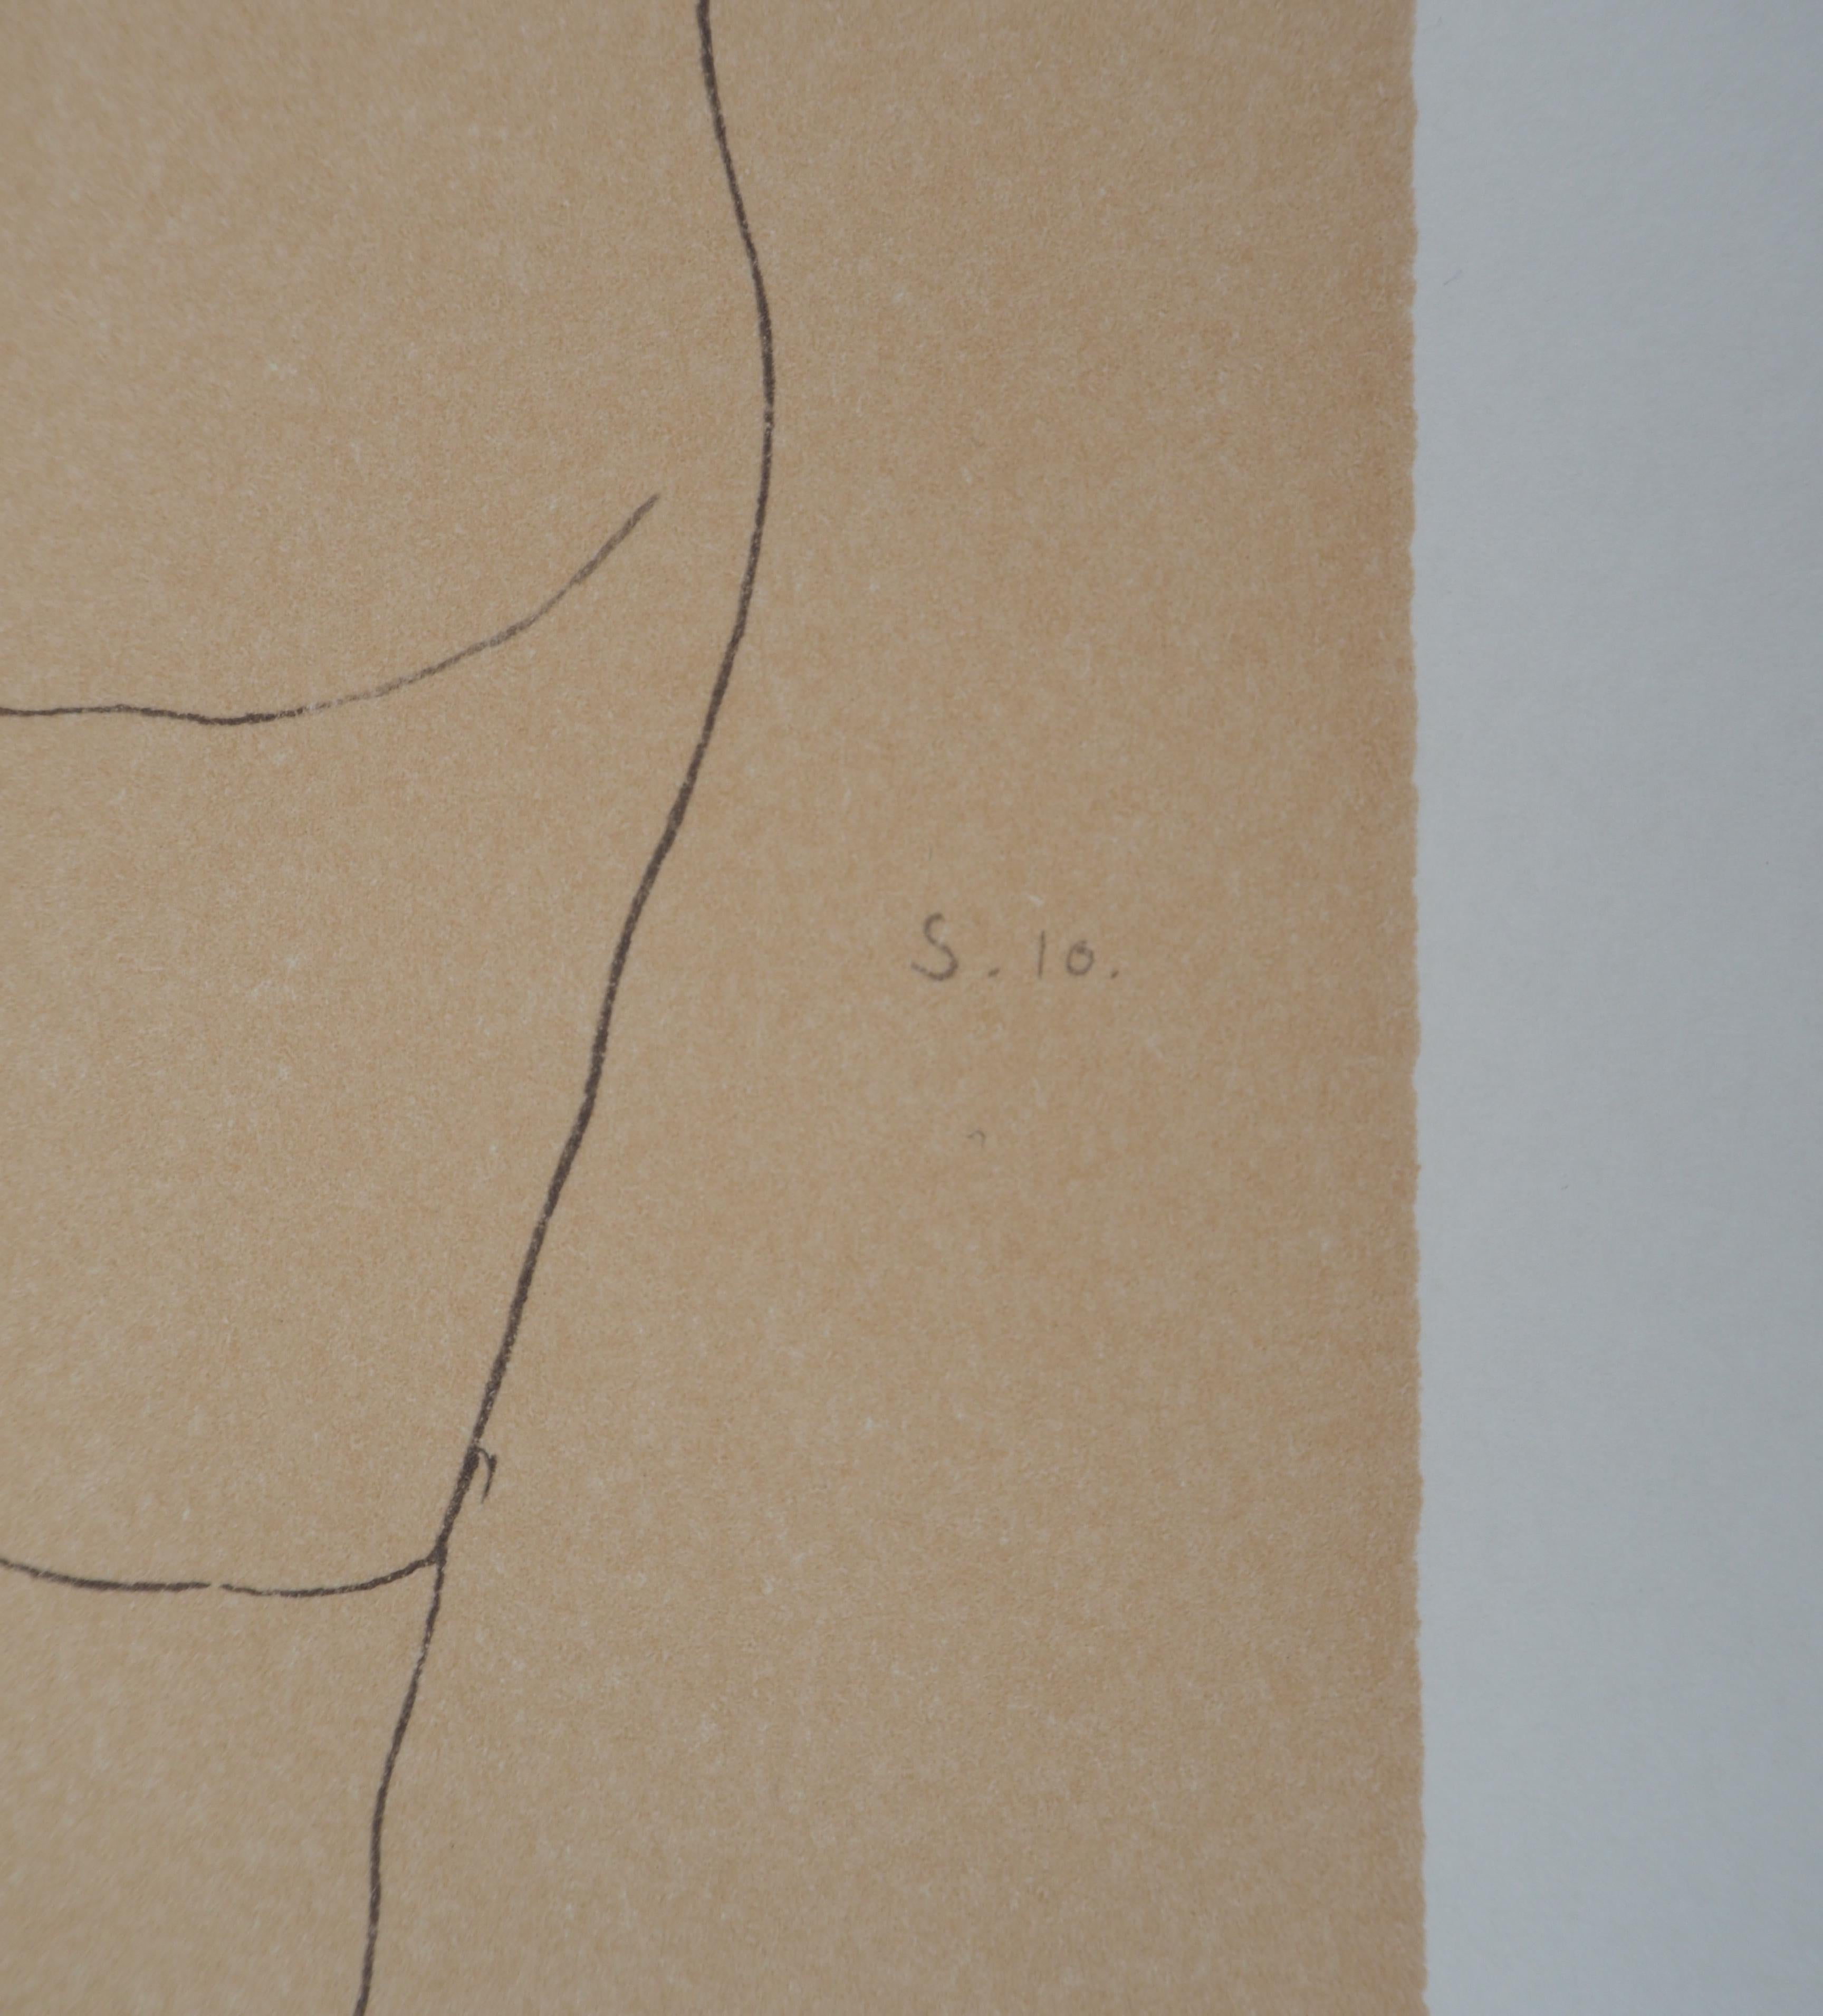 In the Miror - Lithograph (Kallir #D737) - Modern Print by (after) Egon Schiele